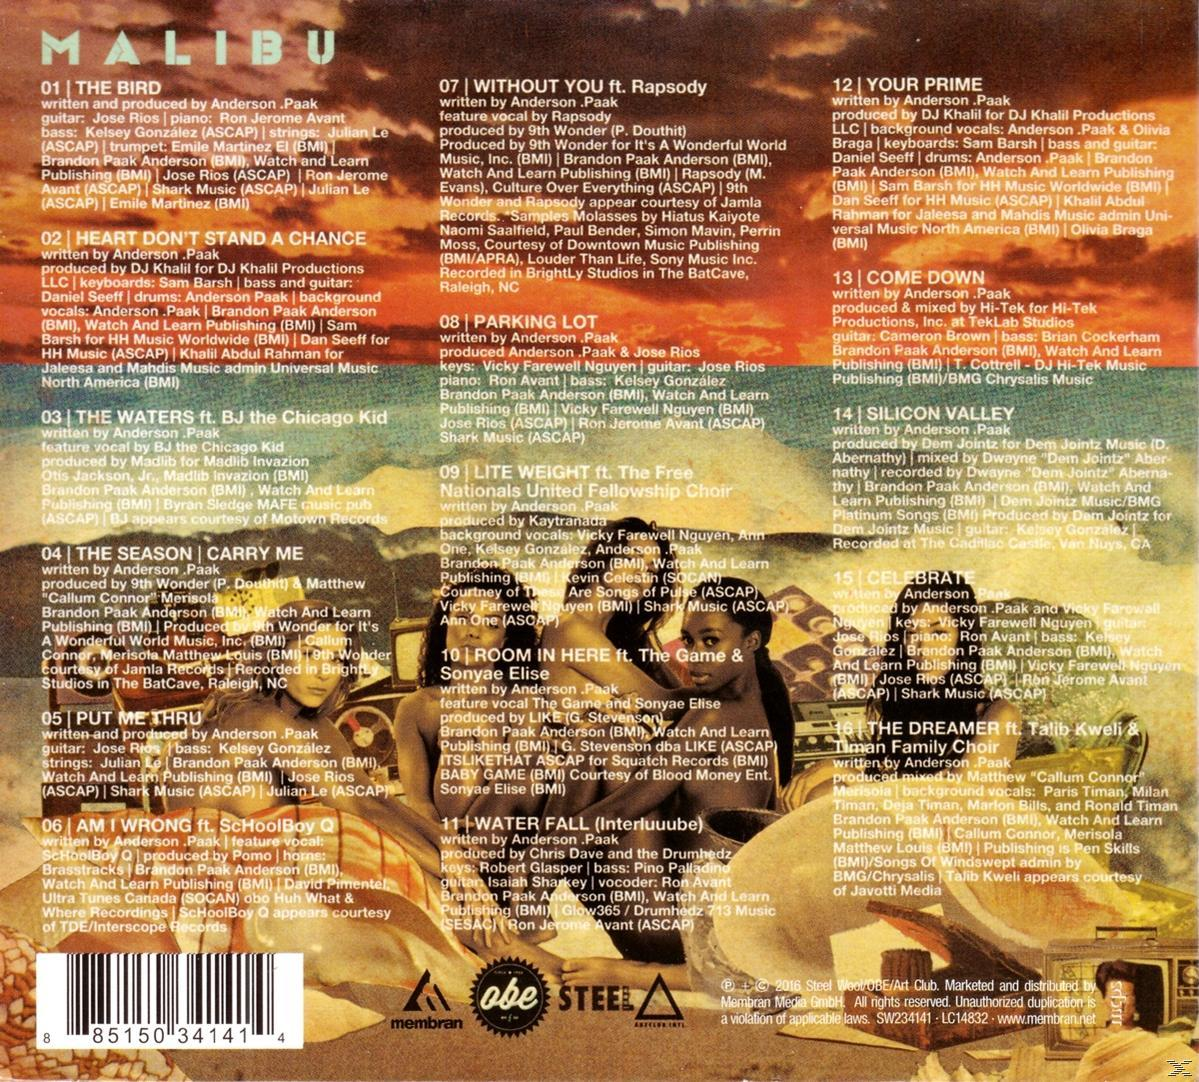 Anderson .Paak - - (CD) Malibu